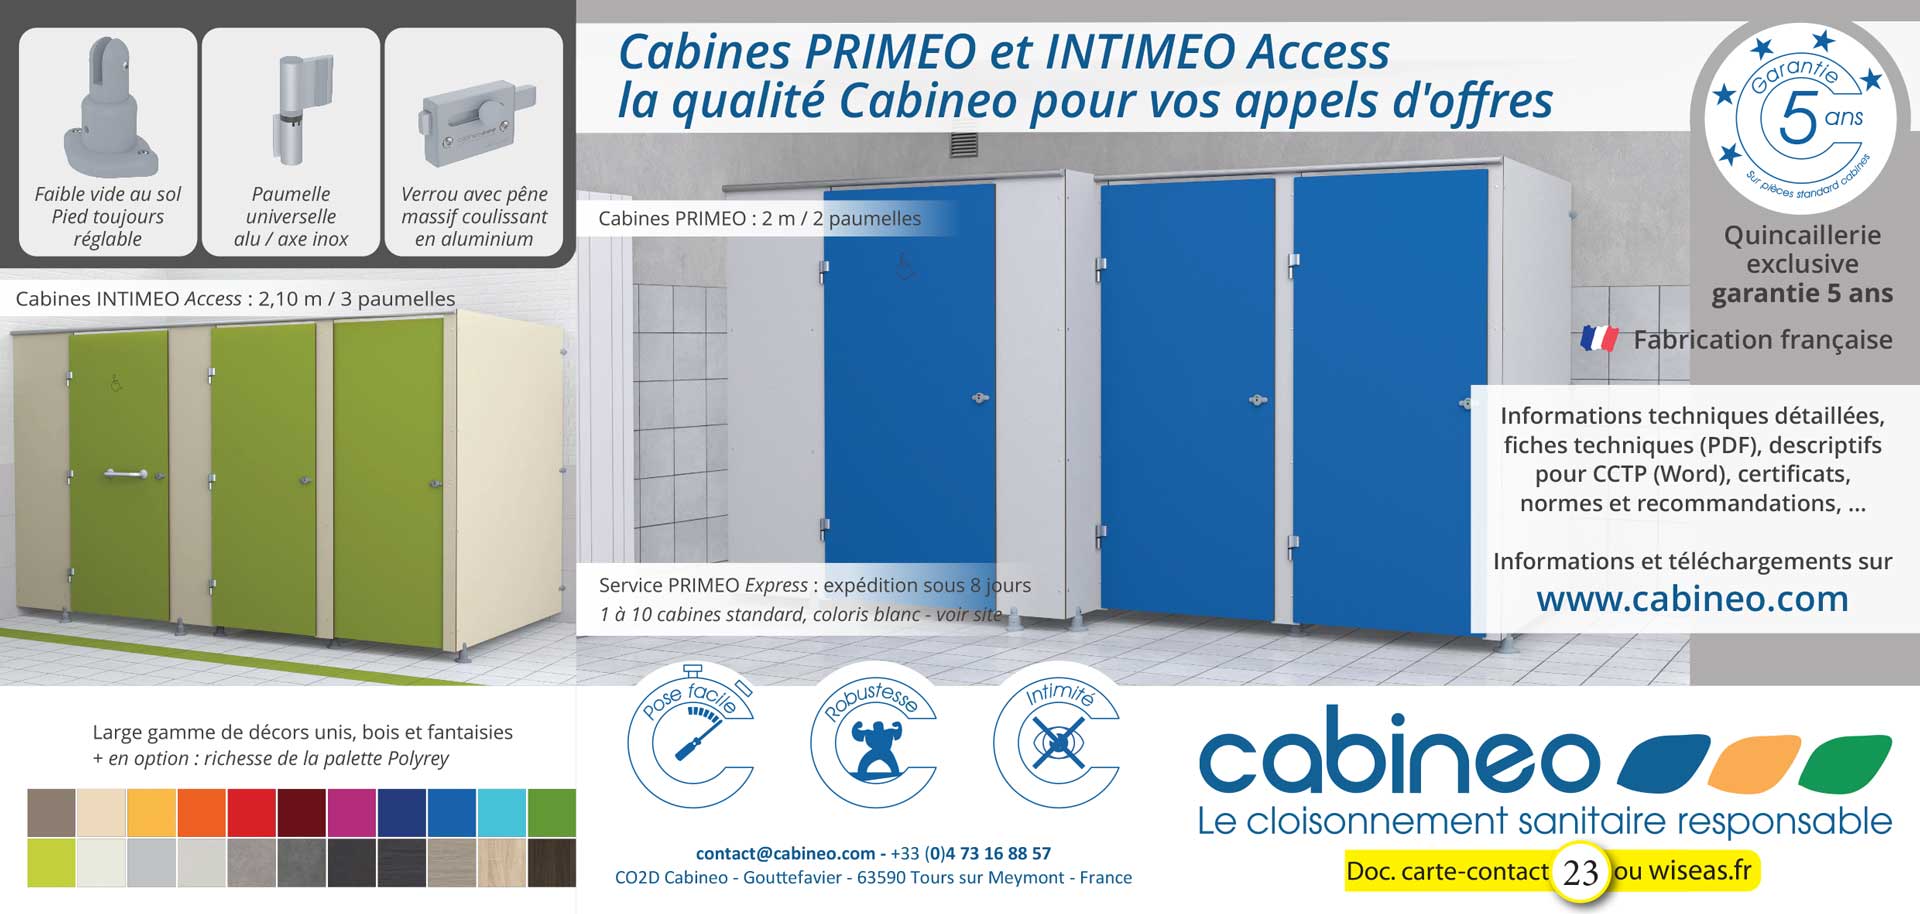 Primeo - Intimeo Access